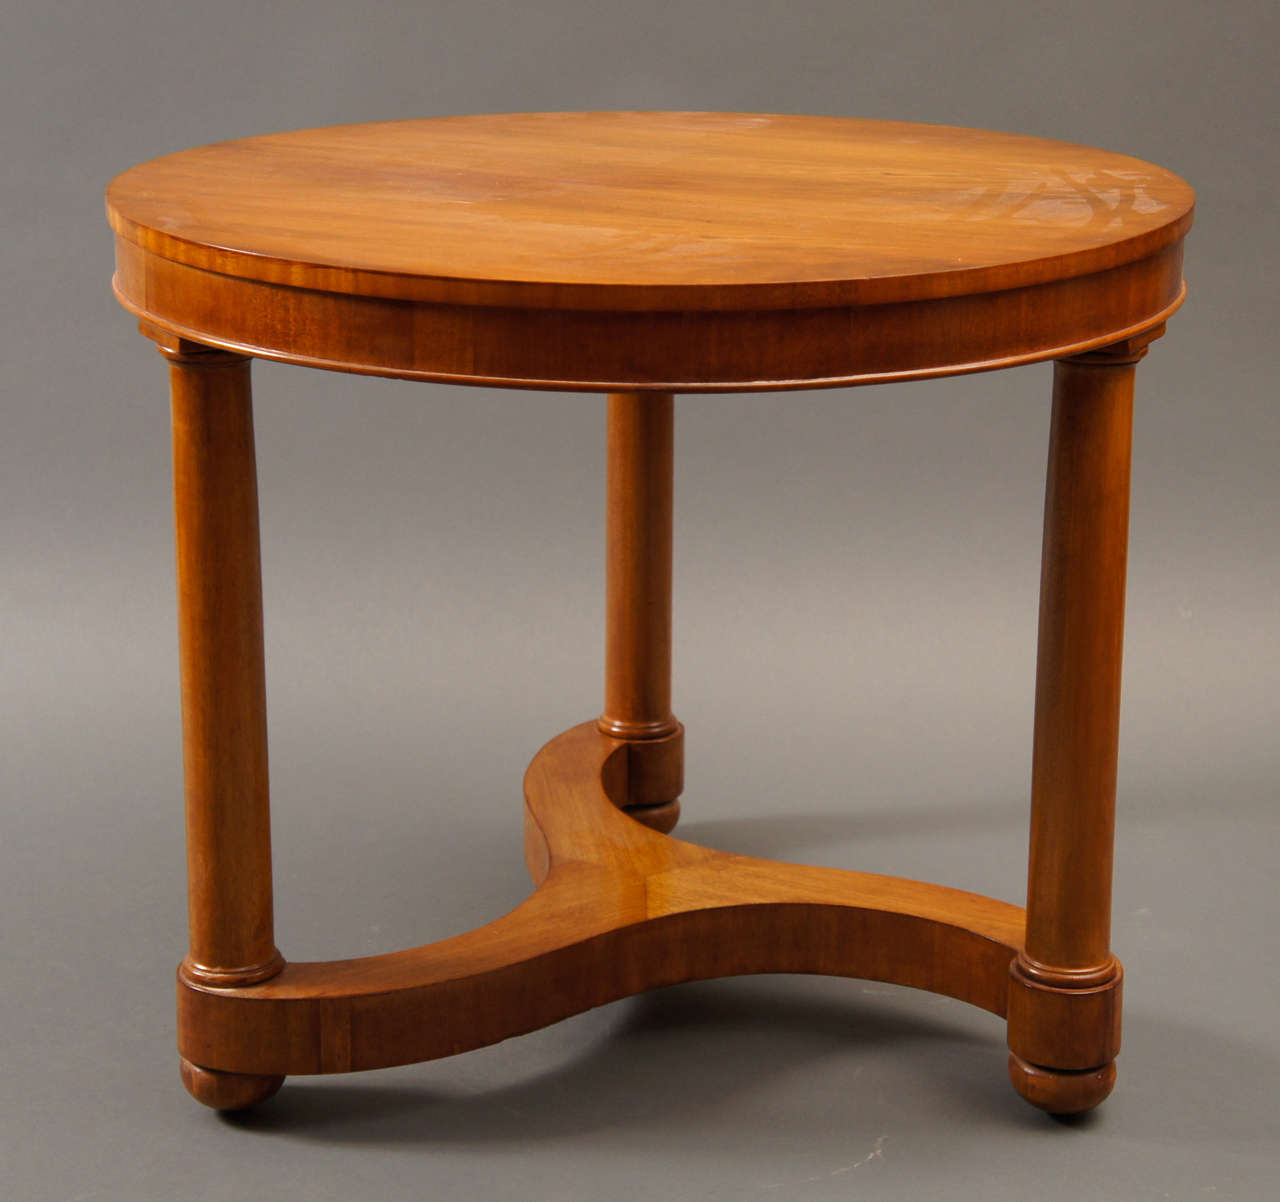 Empire-style fruitwood side table.

PICK UP LOCATION:
NAGA NORTH INC
536 Warren Street
Hudson, NY 12534
518-828-8585
naganorth@gmail.com